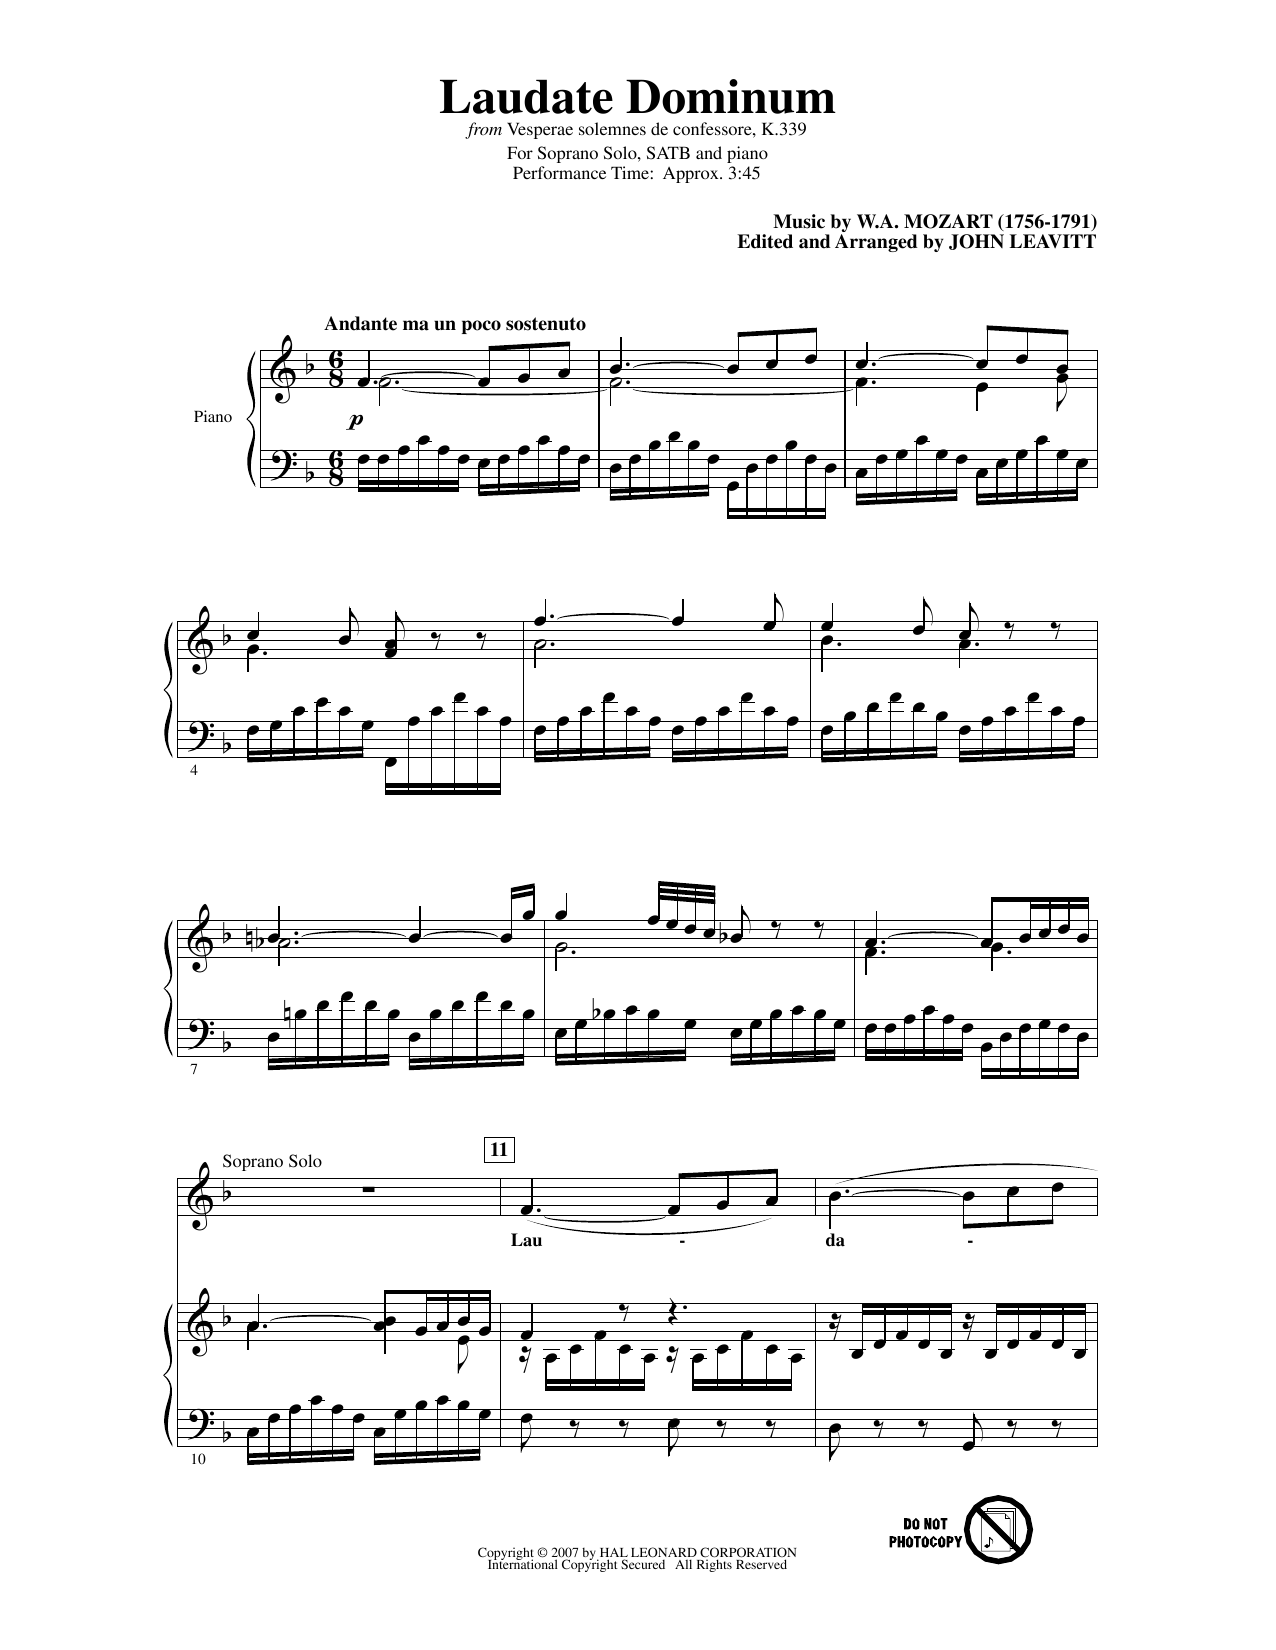 Wolfgang Amadeus Mozart Laudate Dominum (from Vesperae solennes de confessore, K. 339) (arr. John Leavitt) Sheet Music Notes & Chords for SATB Choir - Download or Print PDF